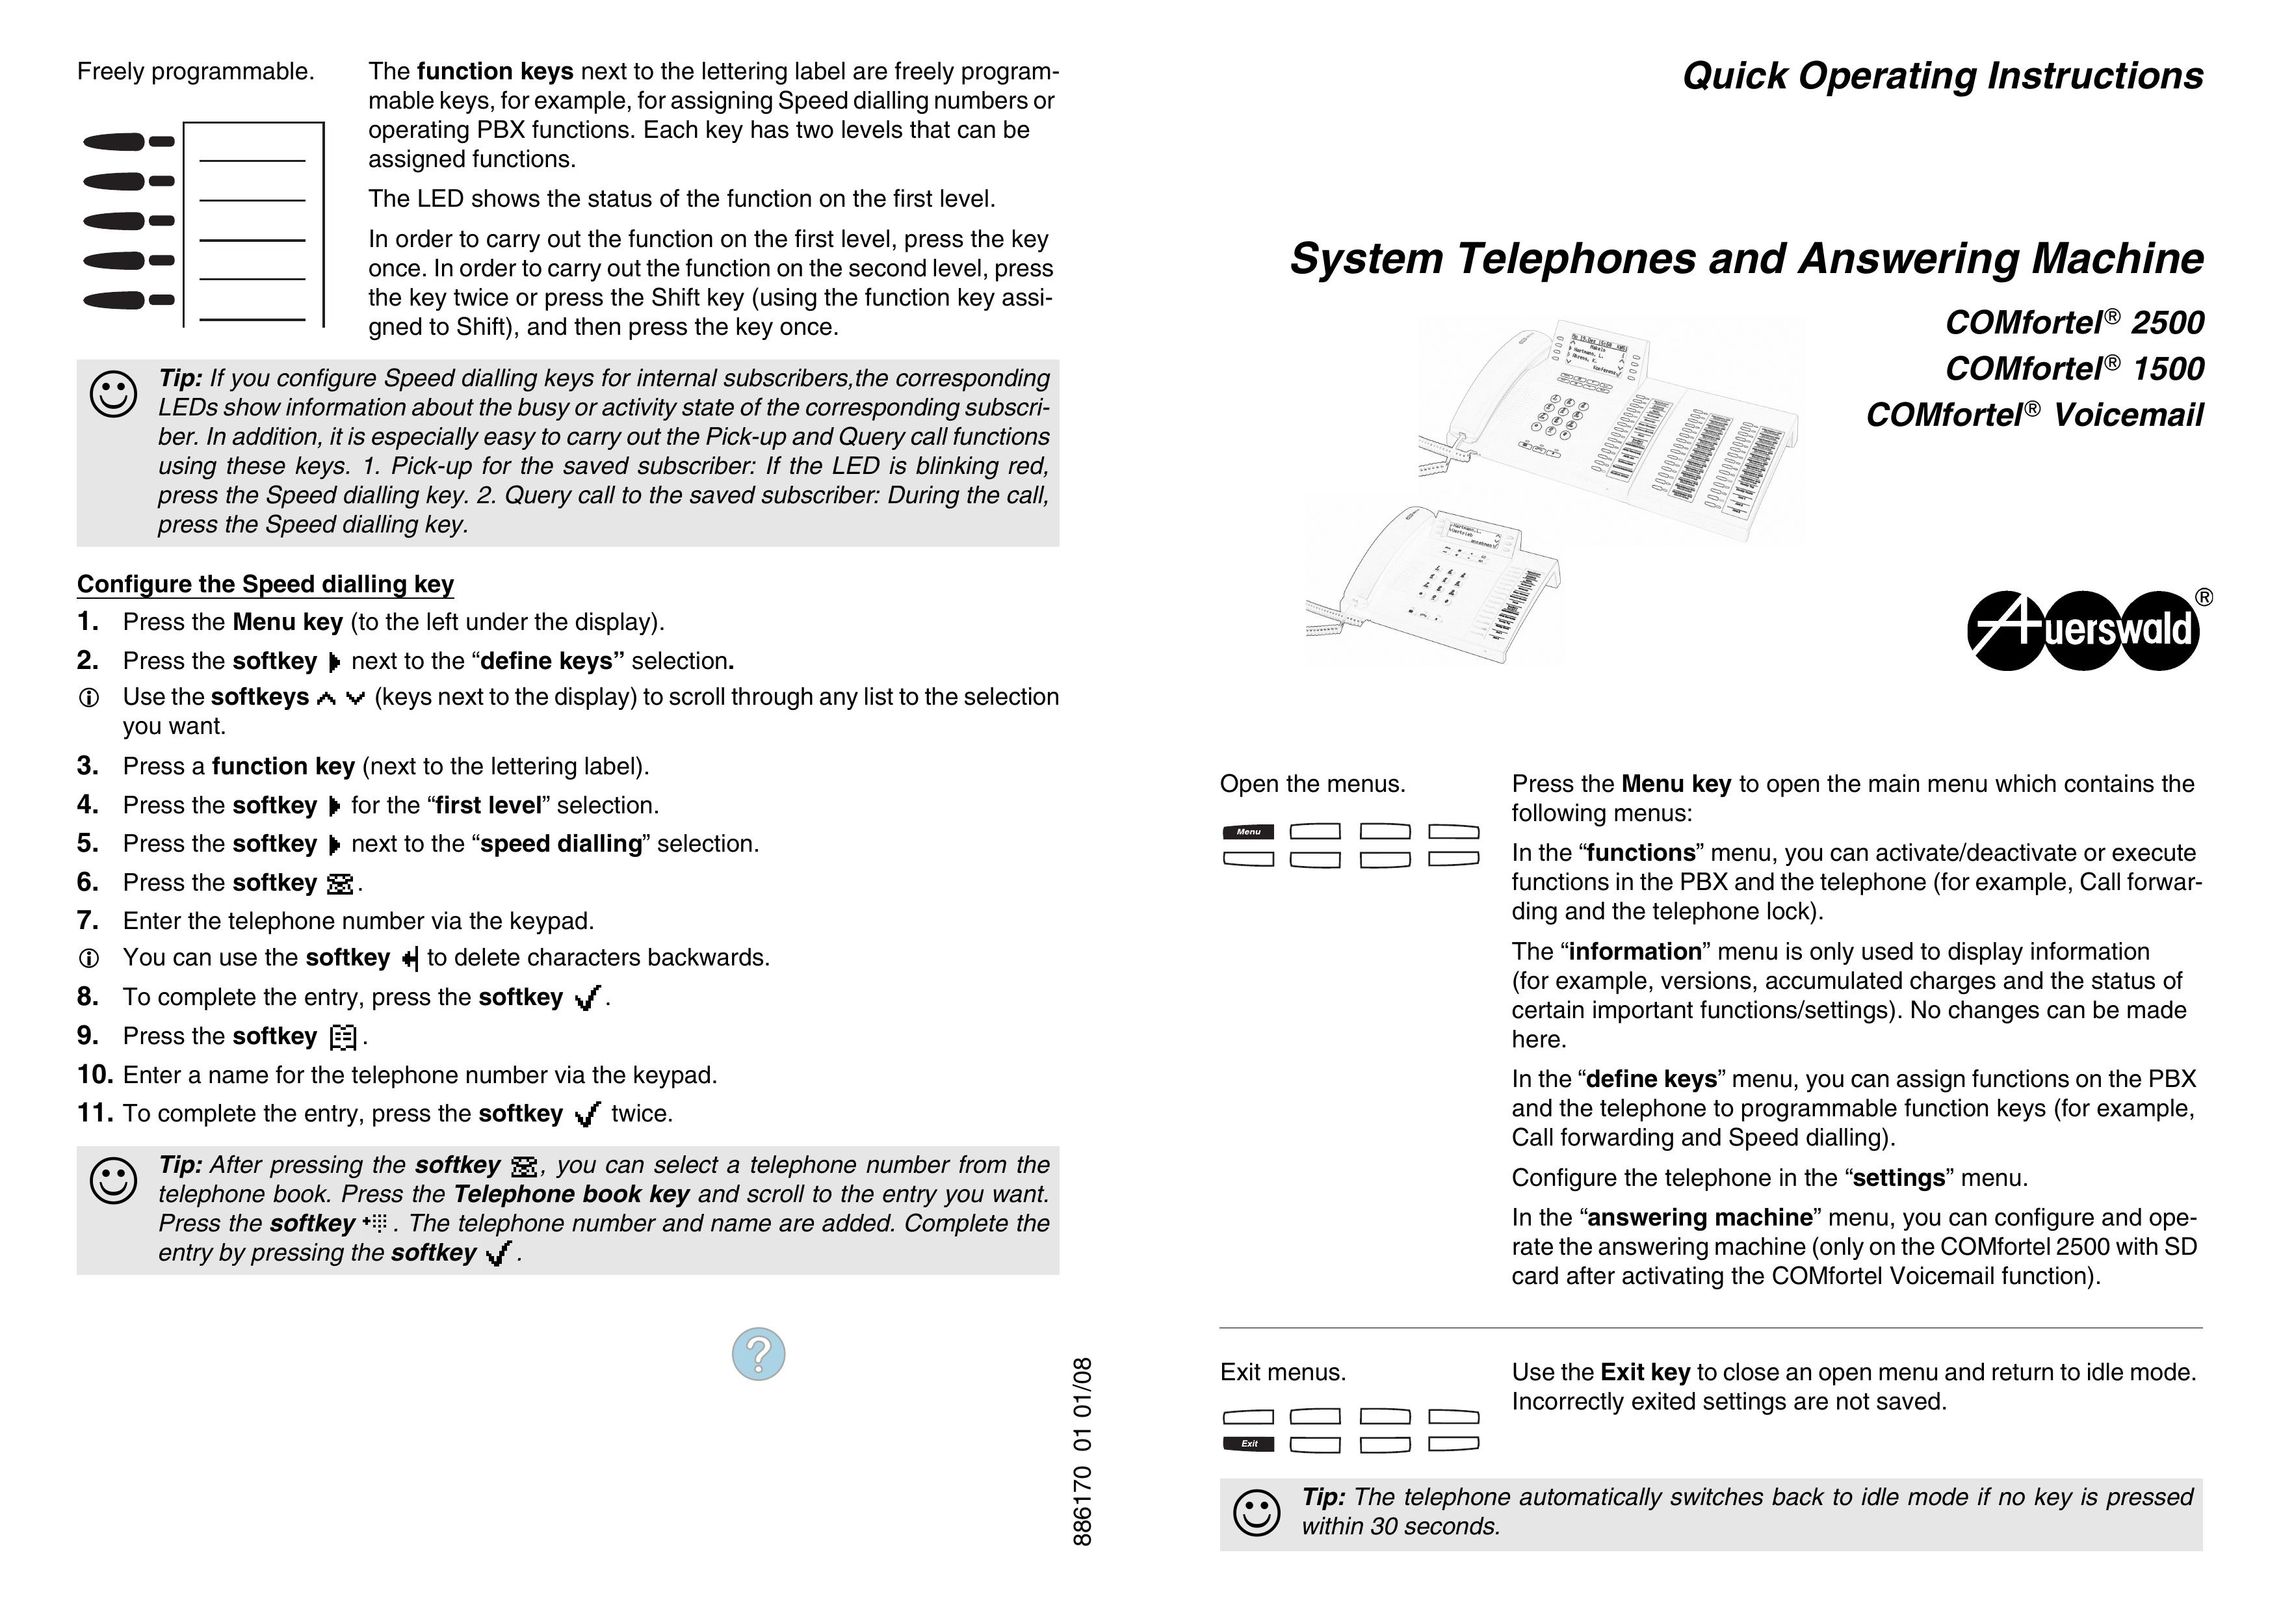 Auerswald COMfortel 1500 Answering Machine User Manual